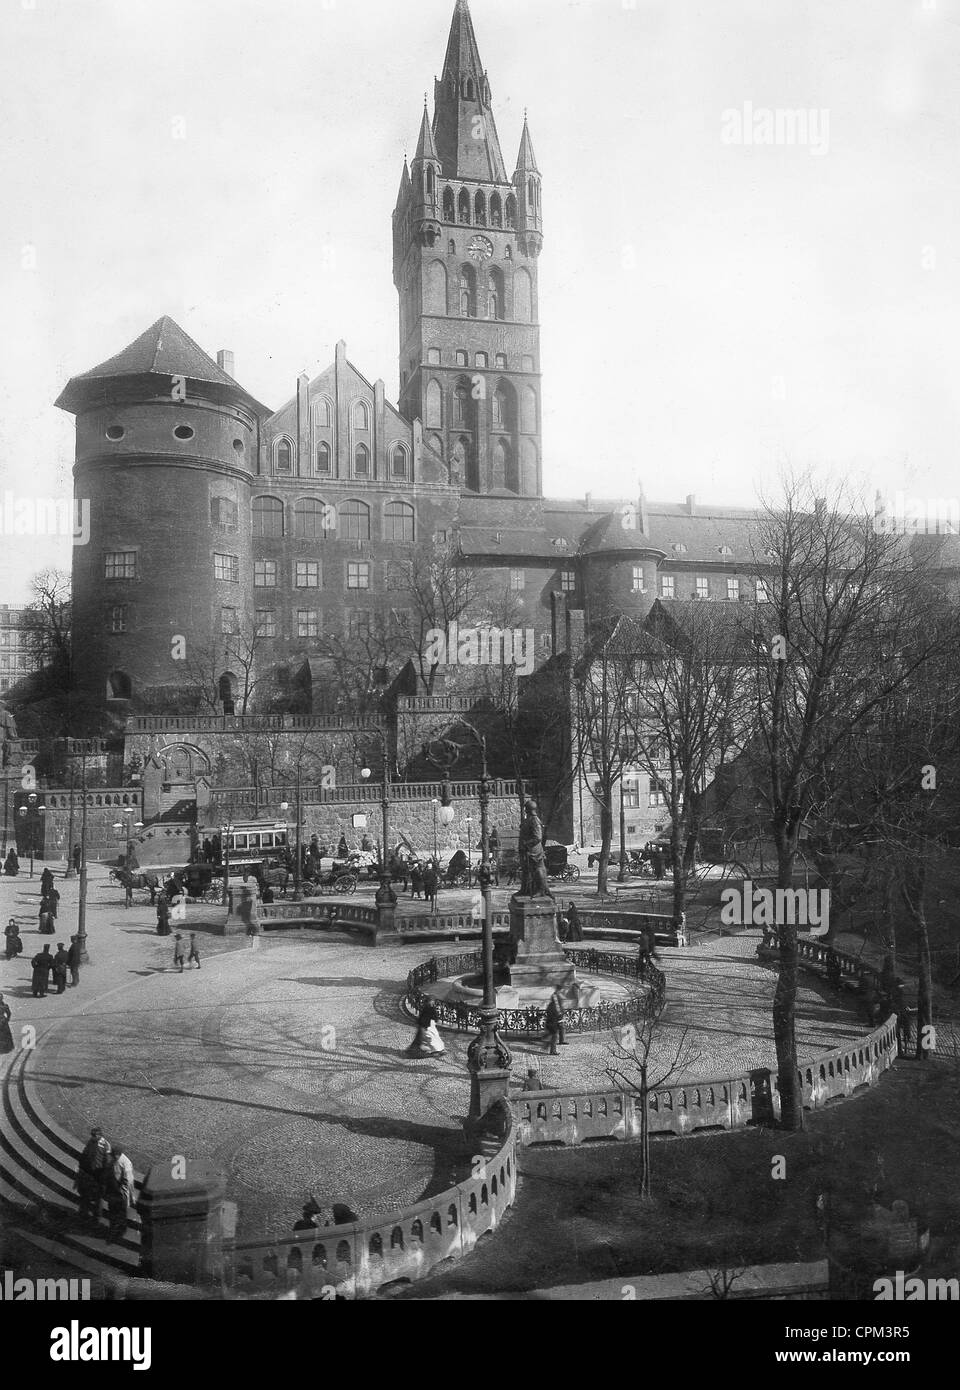 Kaliningrad, around 1900 Stock Photo